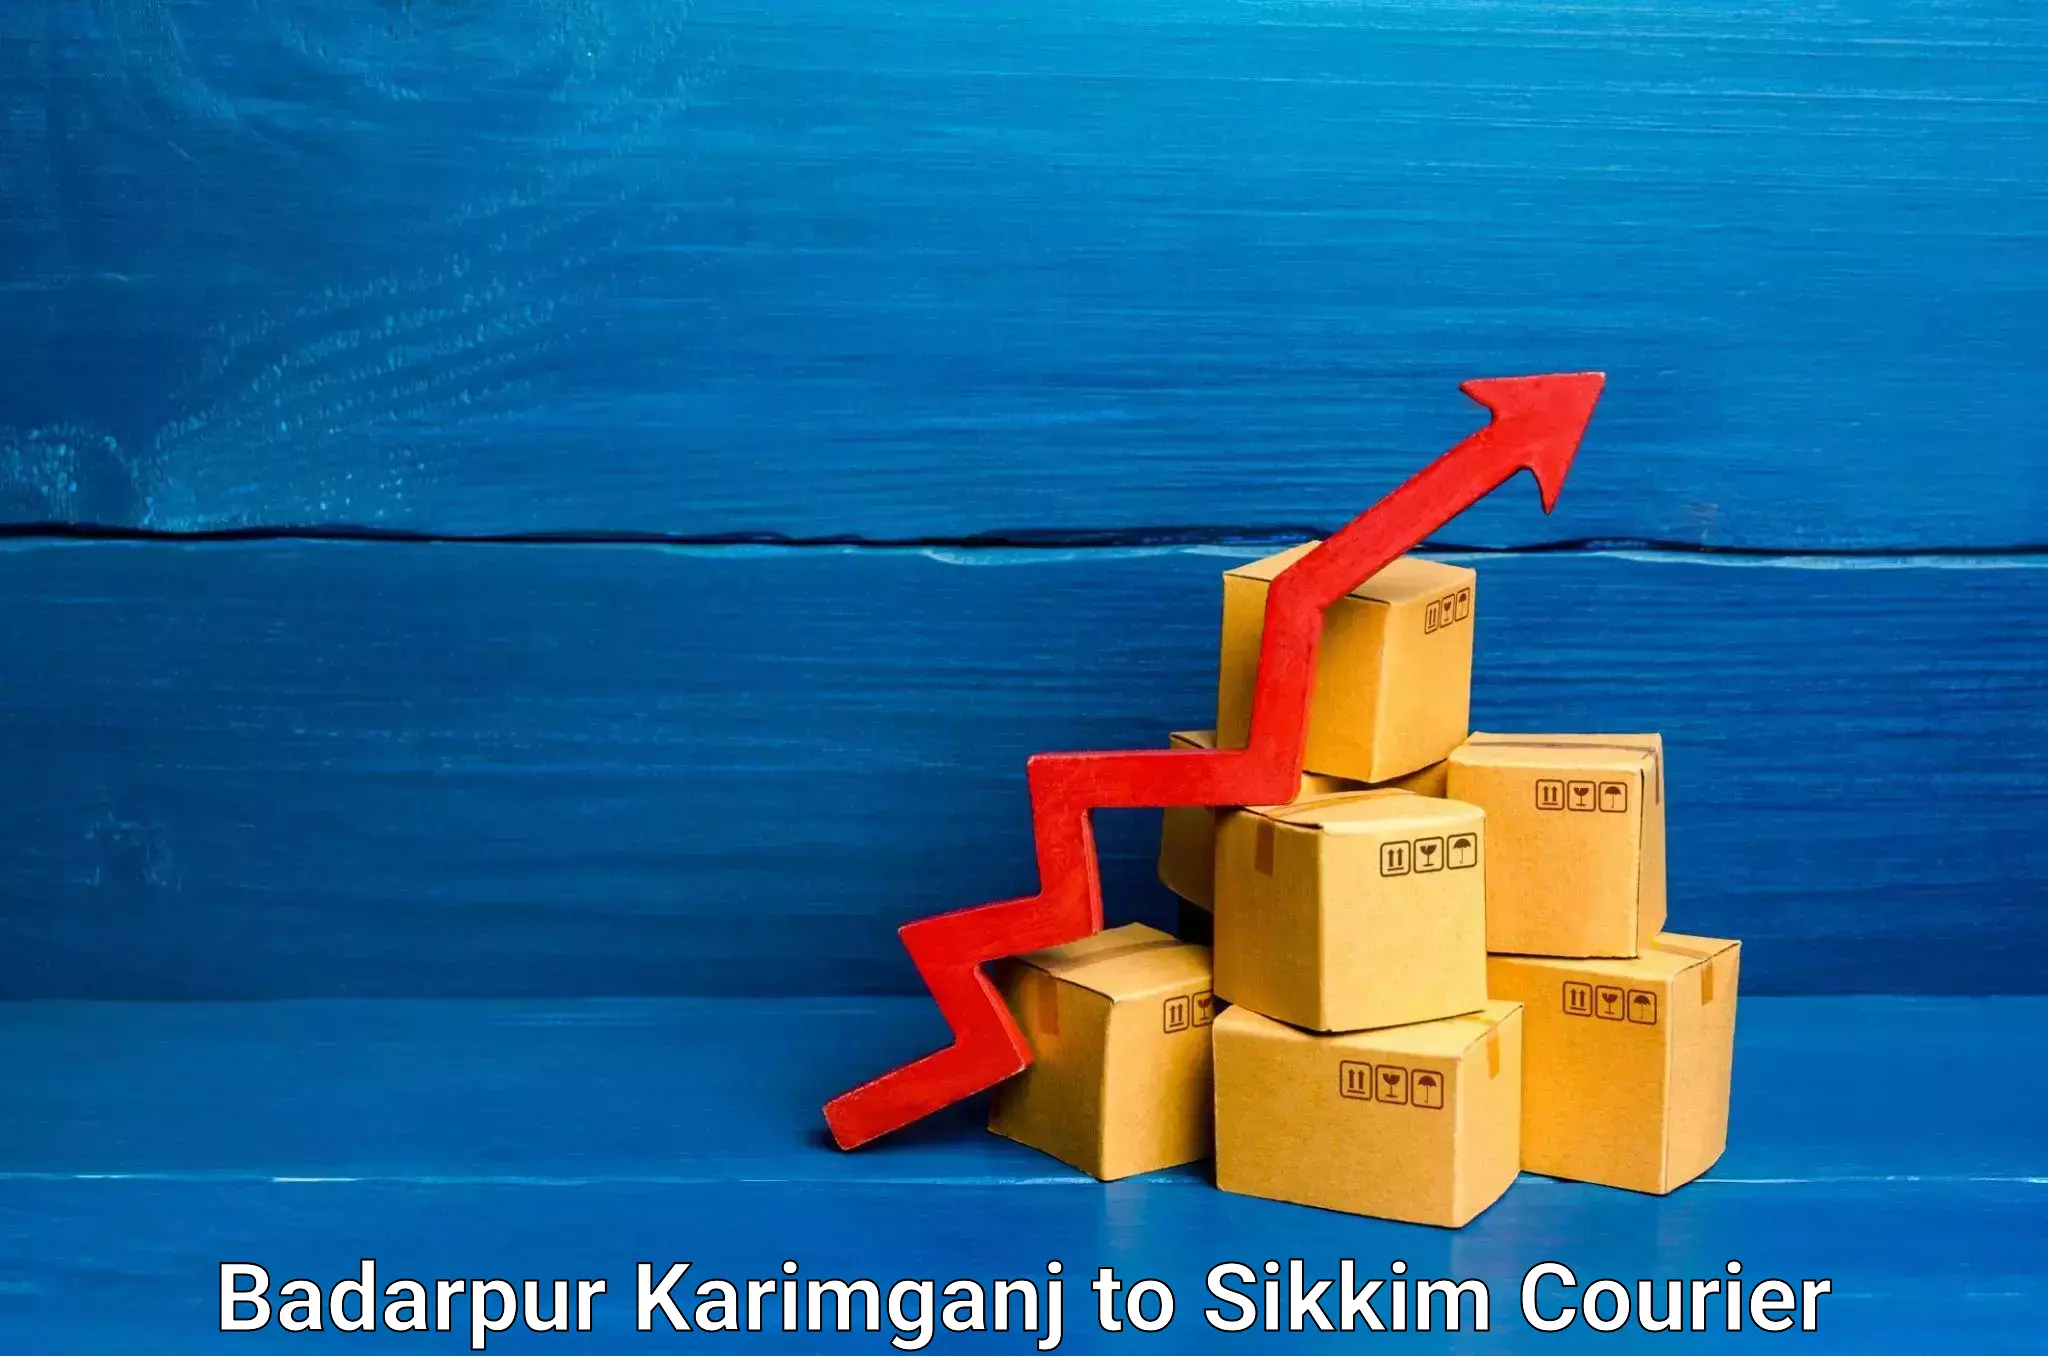 24/7 courier service in Badarpur Karimganj to Sikkim